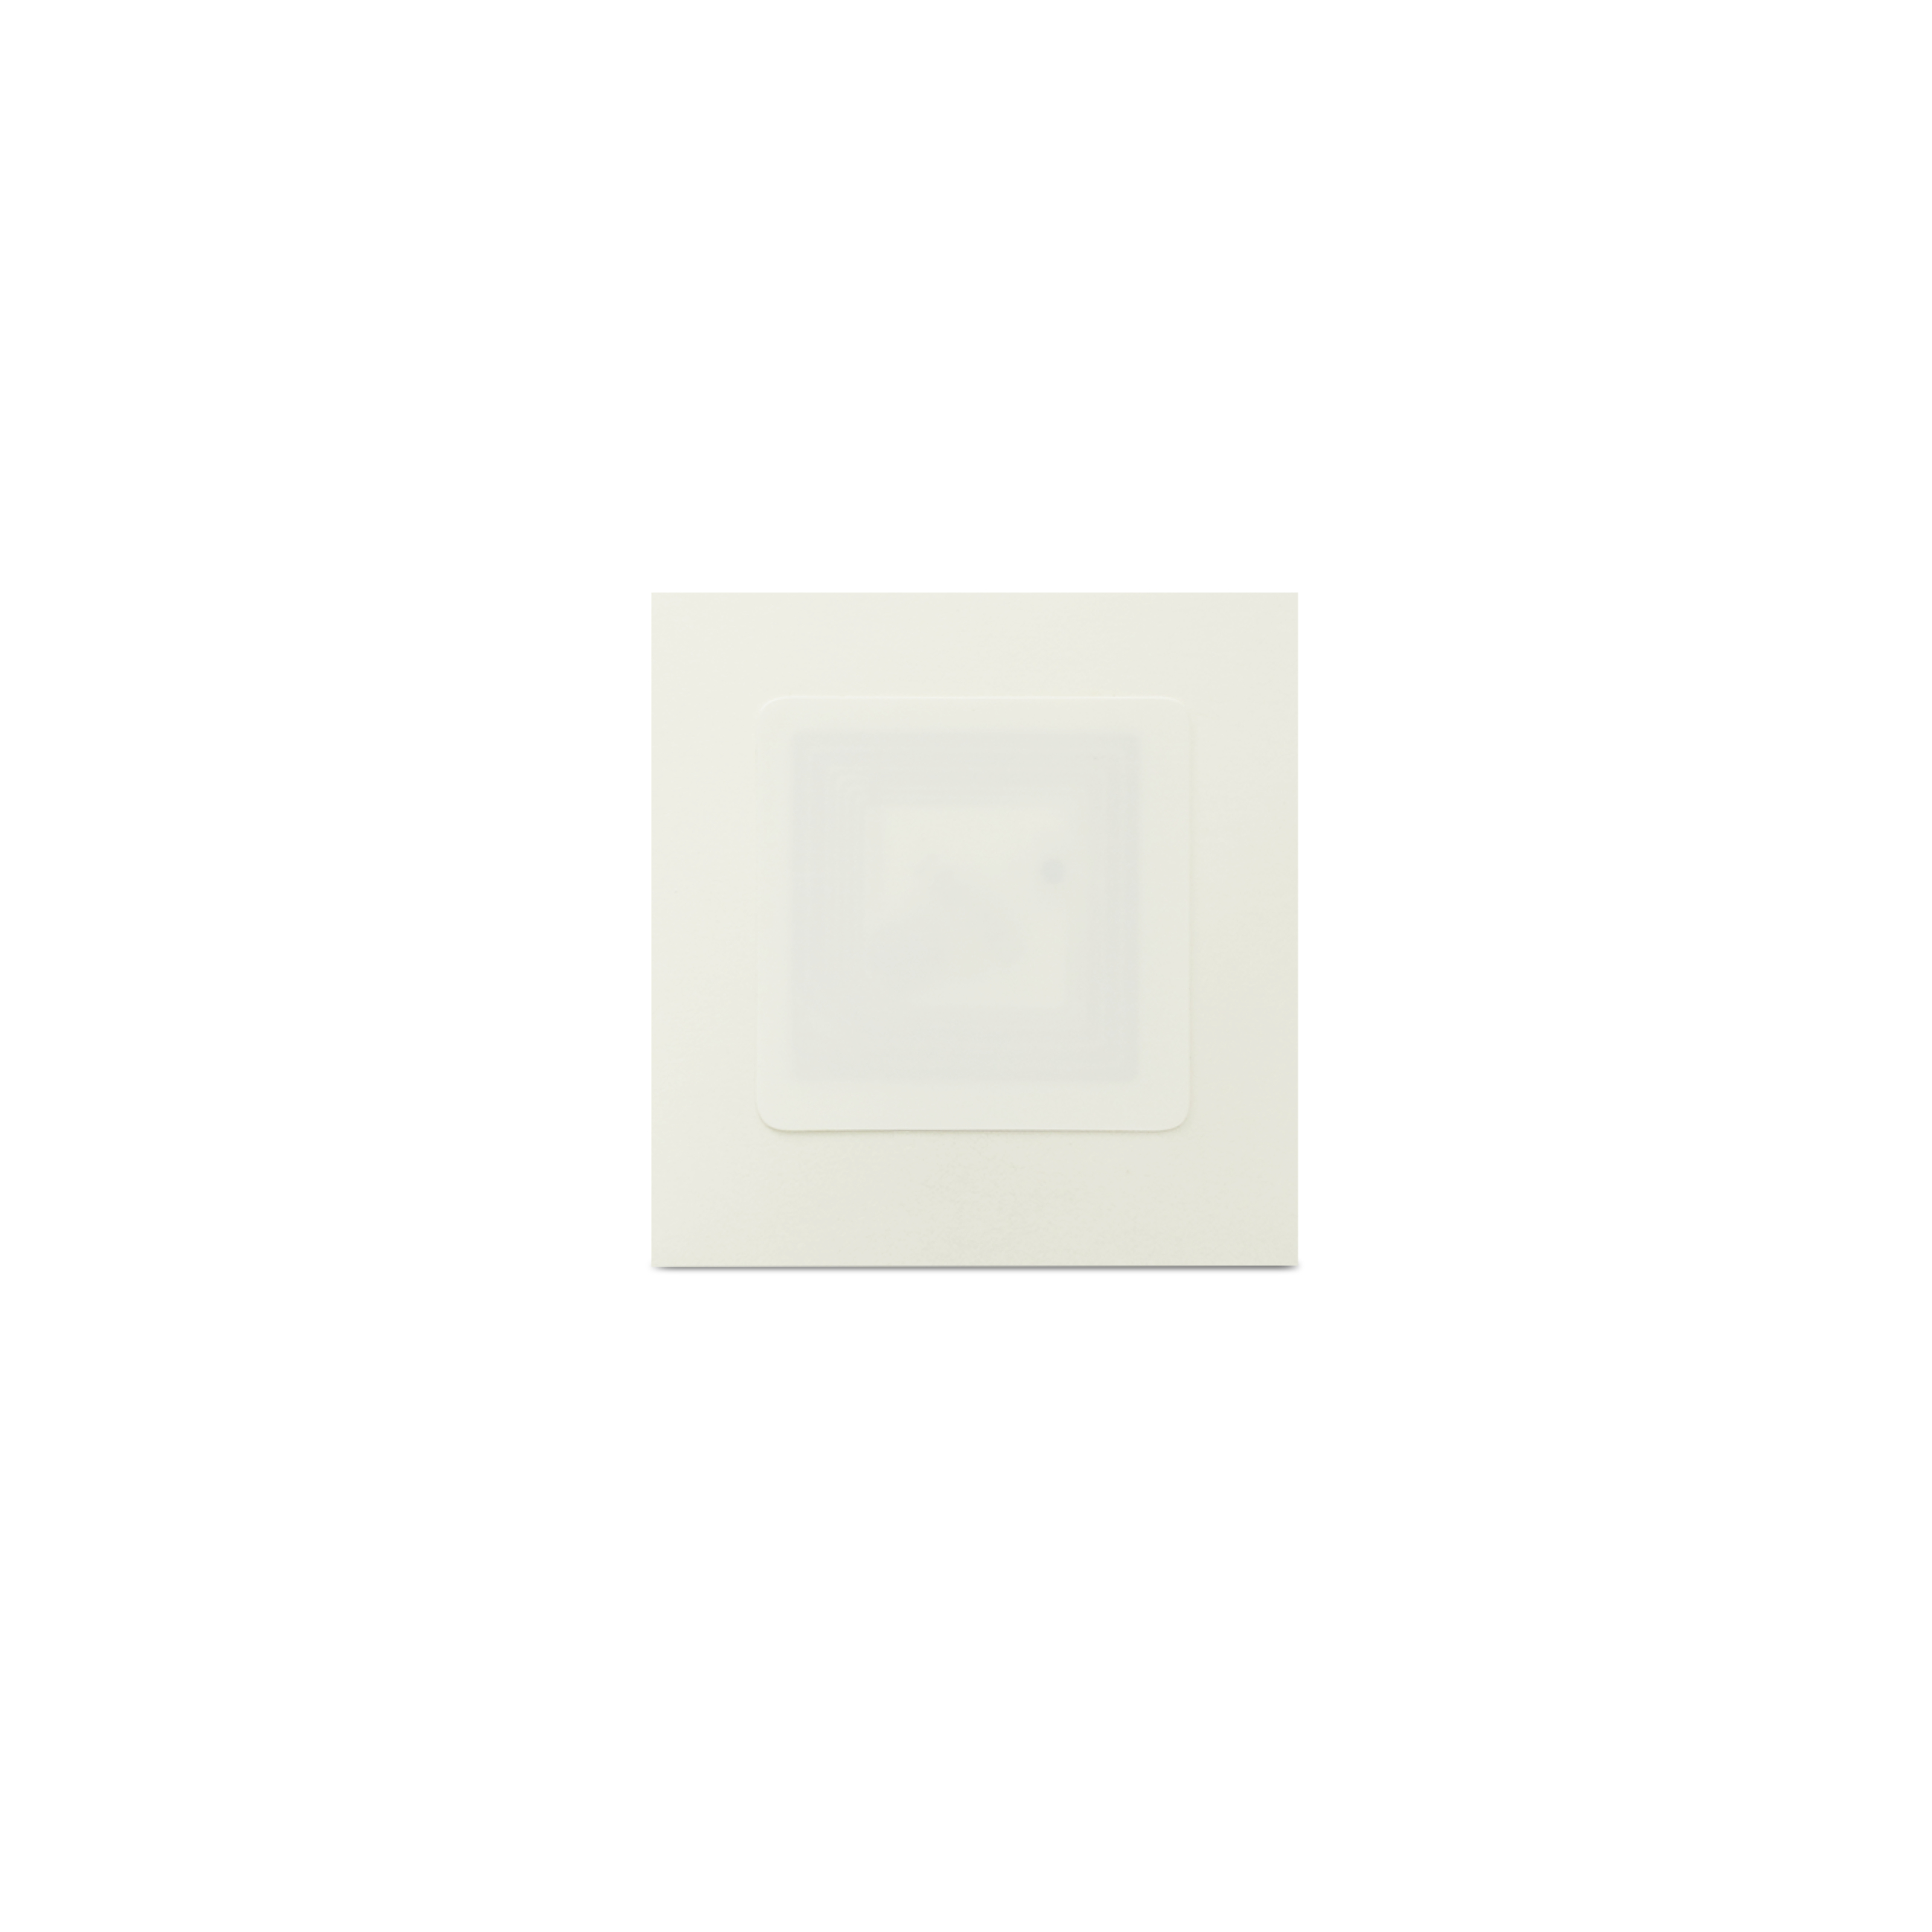 NFC Sticker PET - 18 x 18 mm - NTAG213 - 180 Byte - rectangular - white